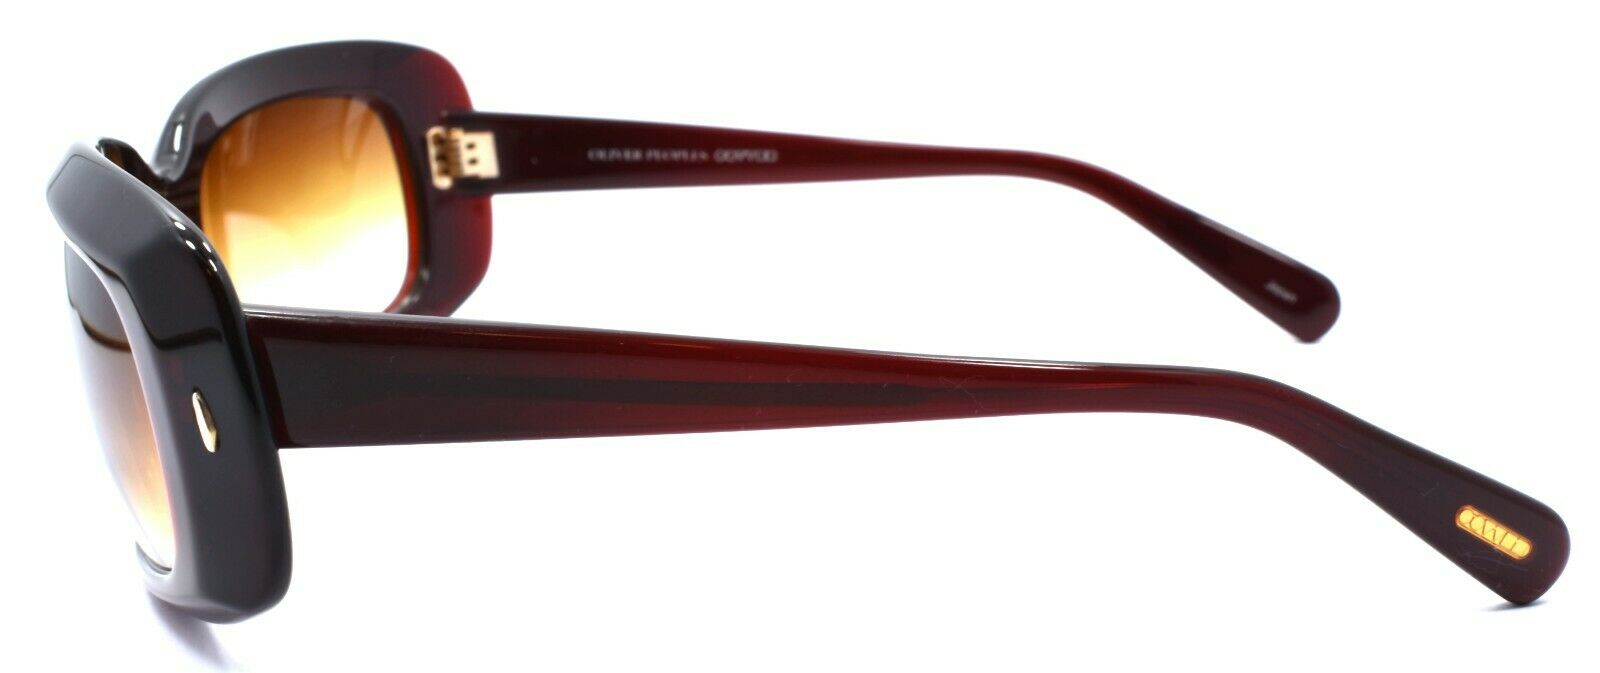 3-Oliver Peoples Ingenue SI Women's Sunglasses Burgundy / Brown Gradient JAPAN &-Does not apply-IKSpecs